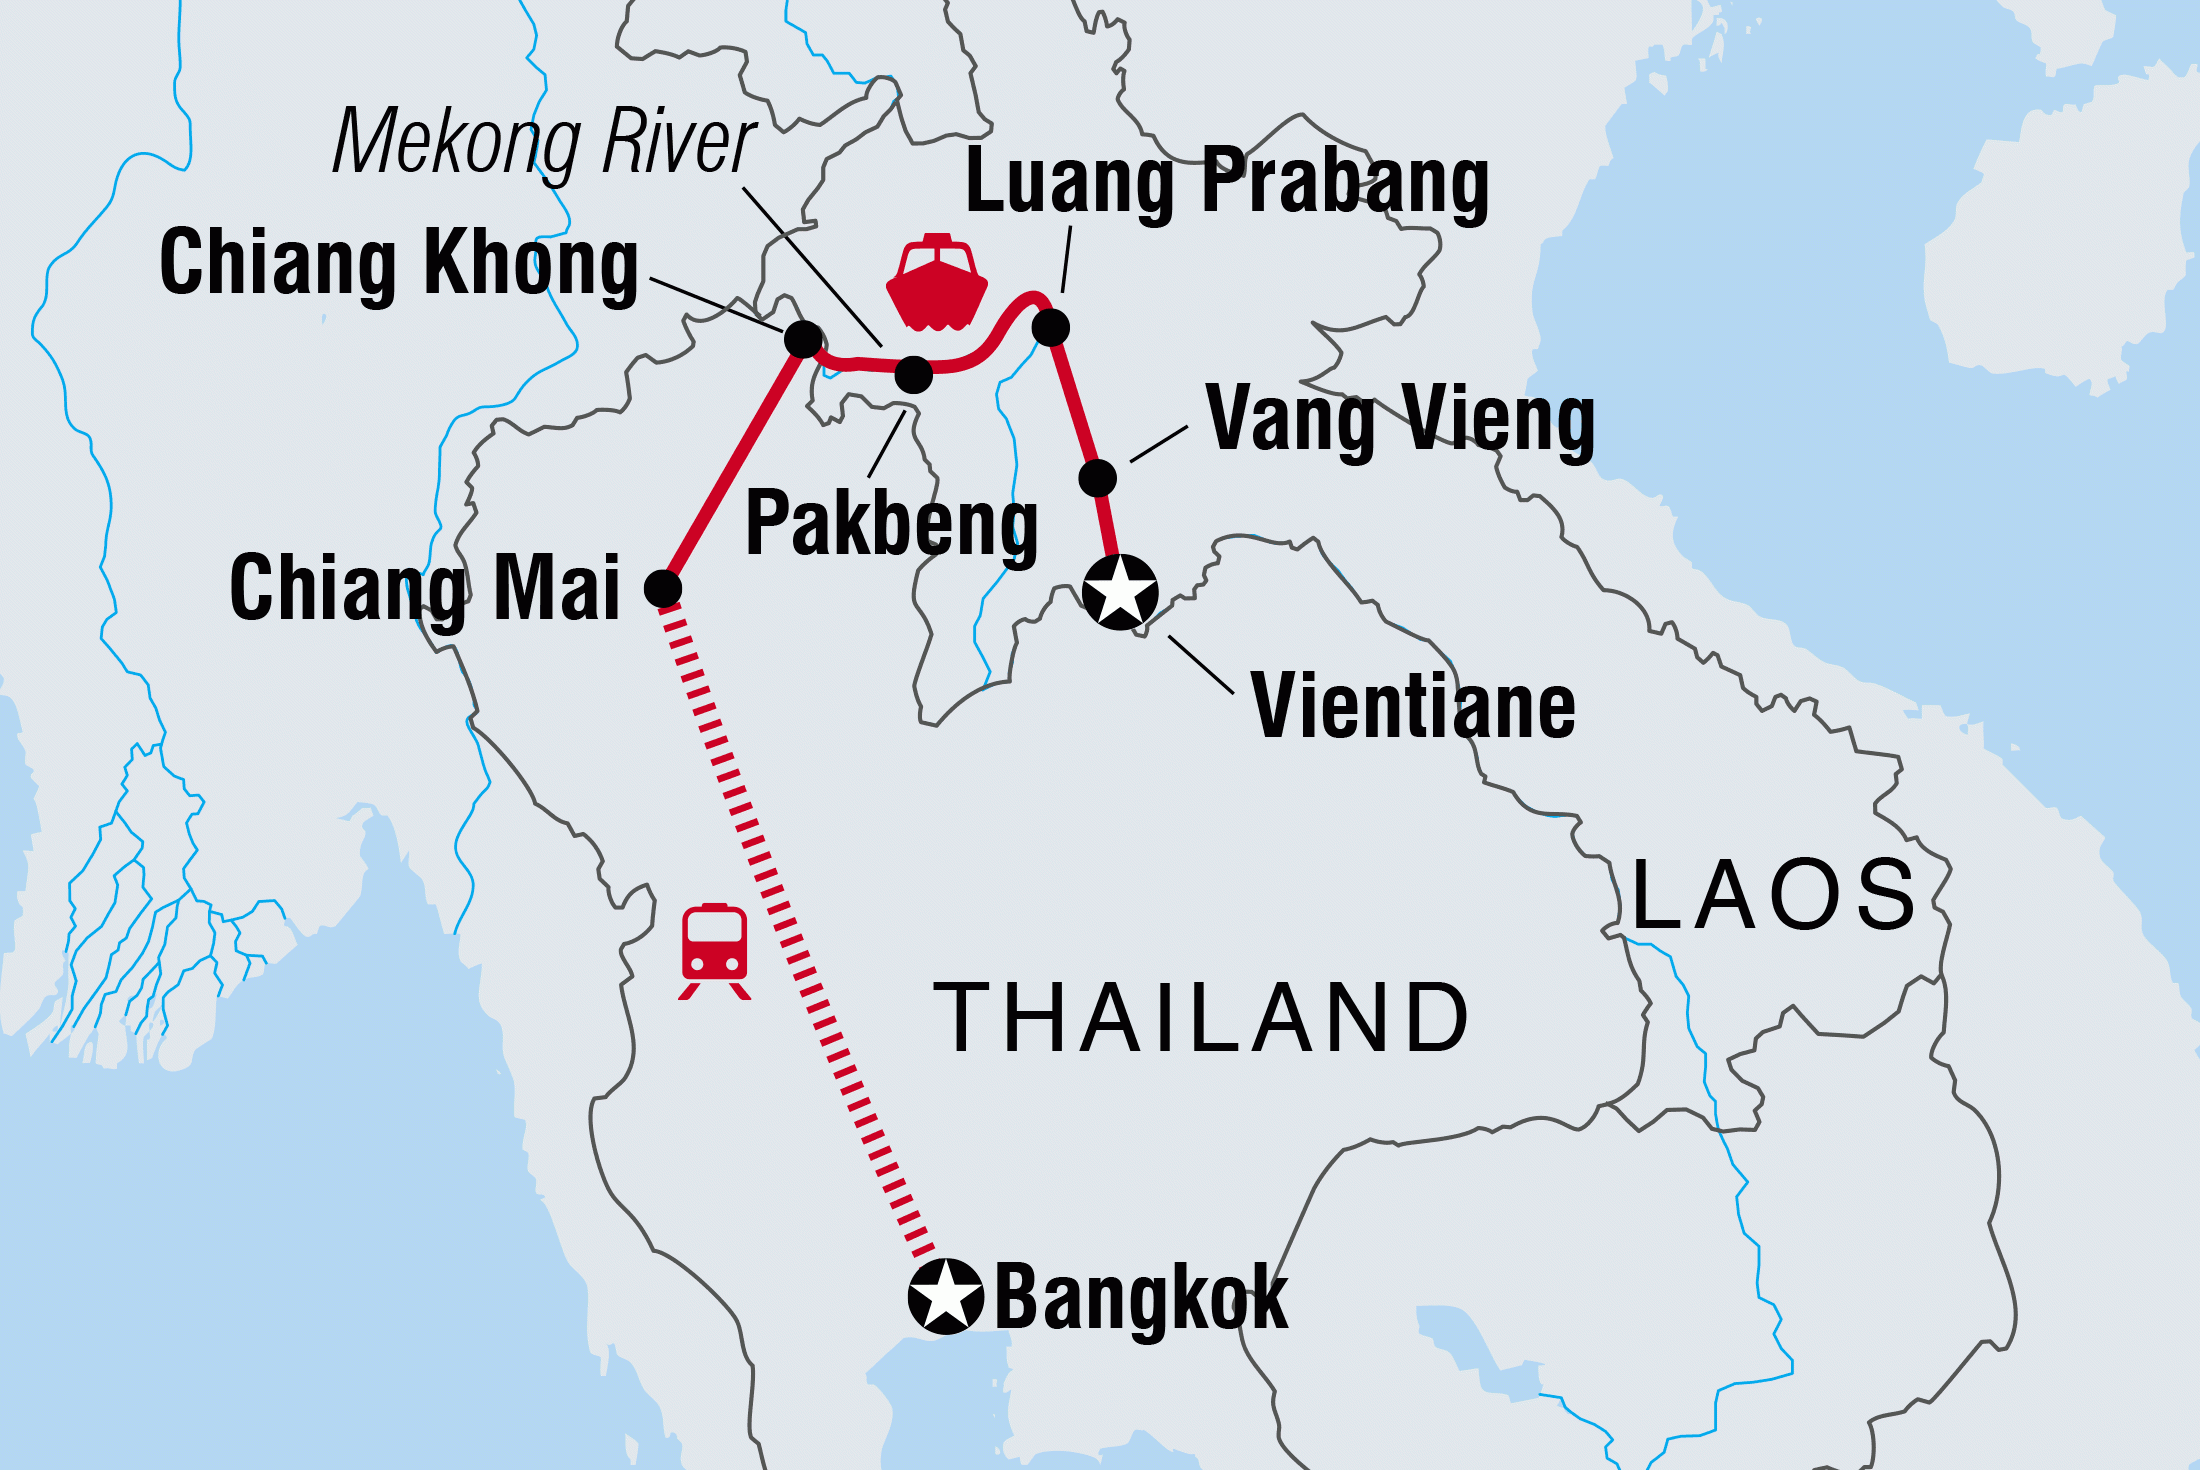 intrepid travel thailand and laos